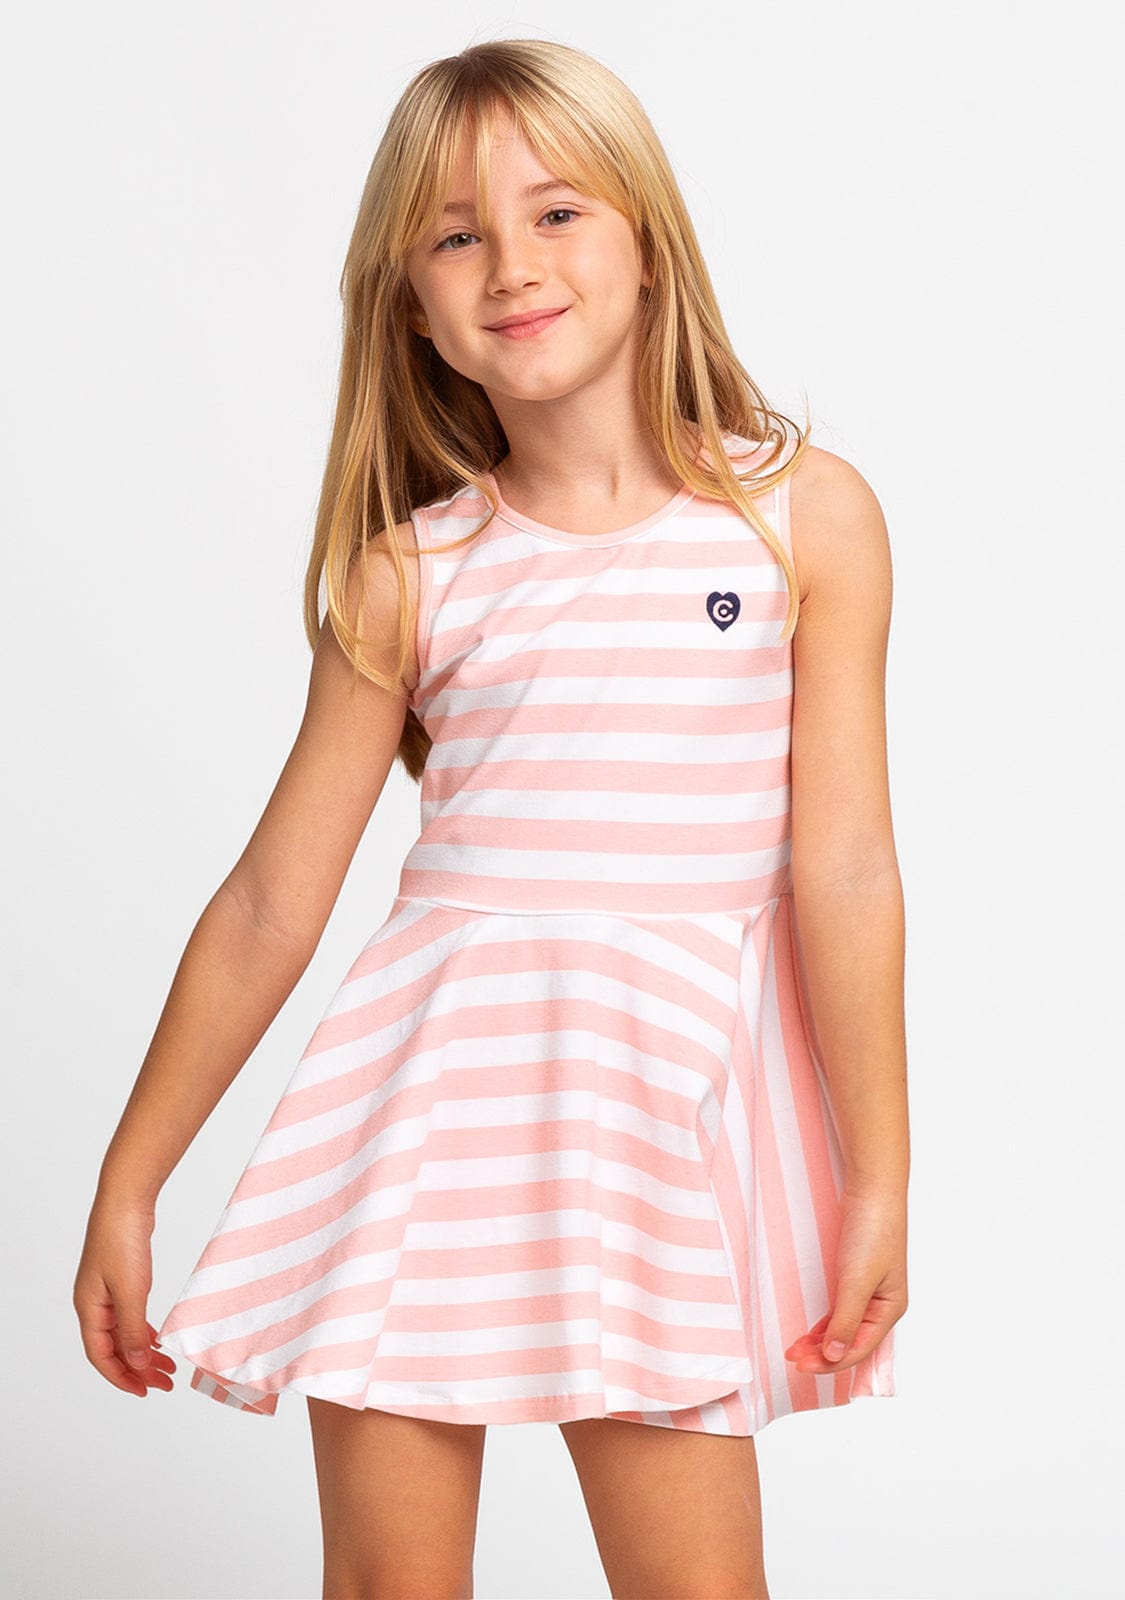 CONGUITOS TEXTIL Clothing Girl's Pink Stripes Skater Dress